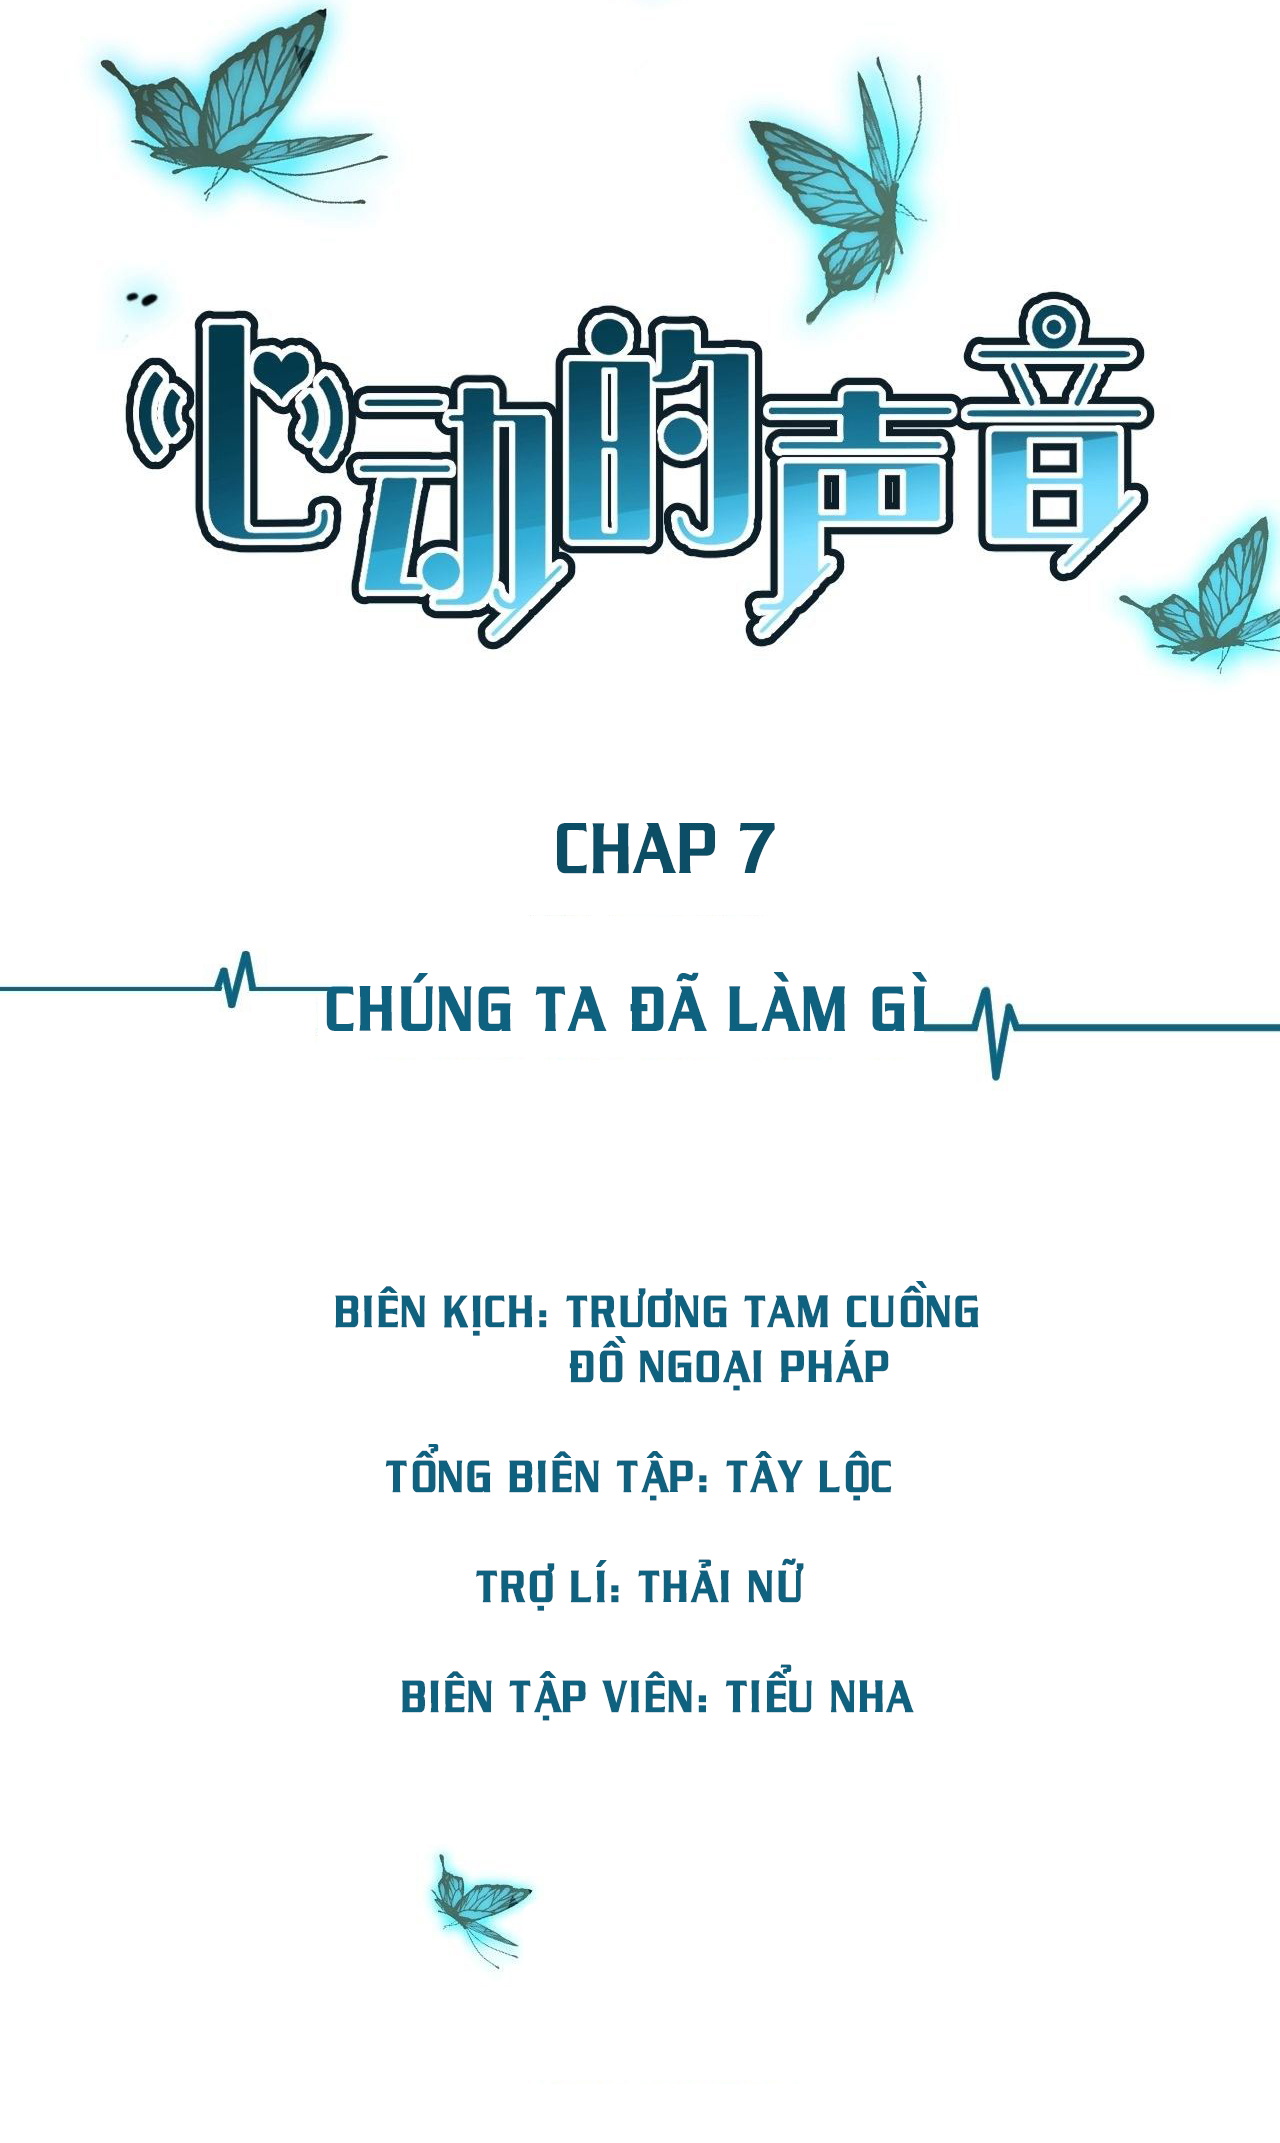 am-thanh-rung-dong-chap-7-1